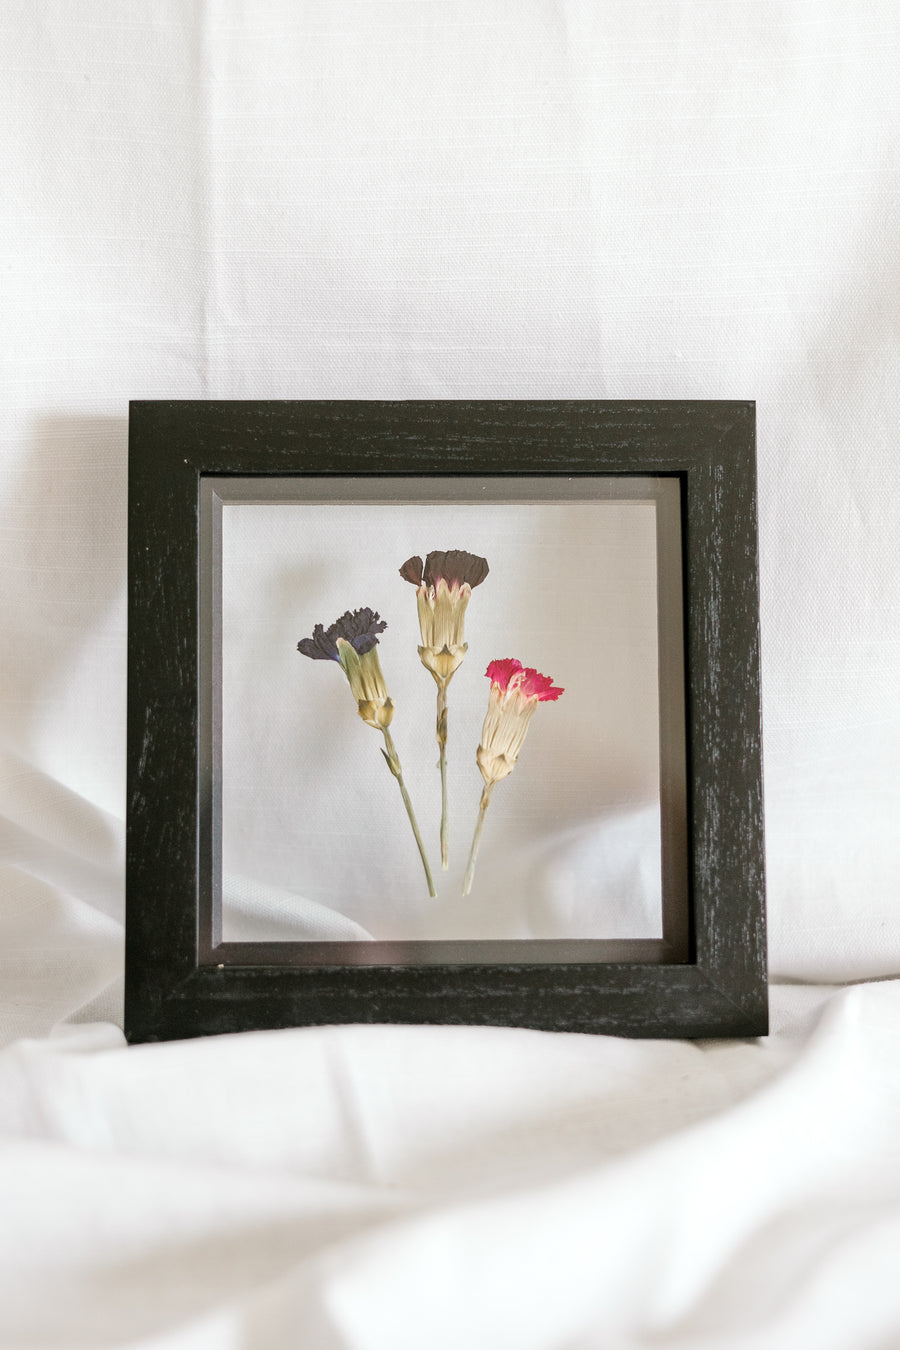 6x6 January birth flower frame - Carnations